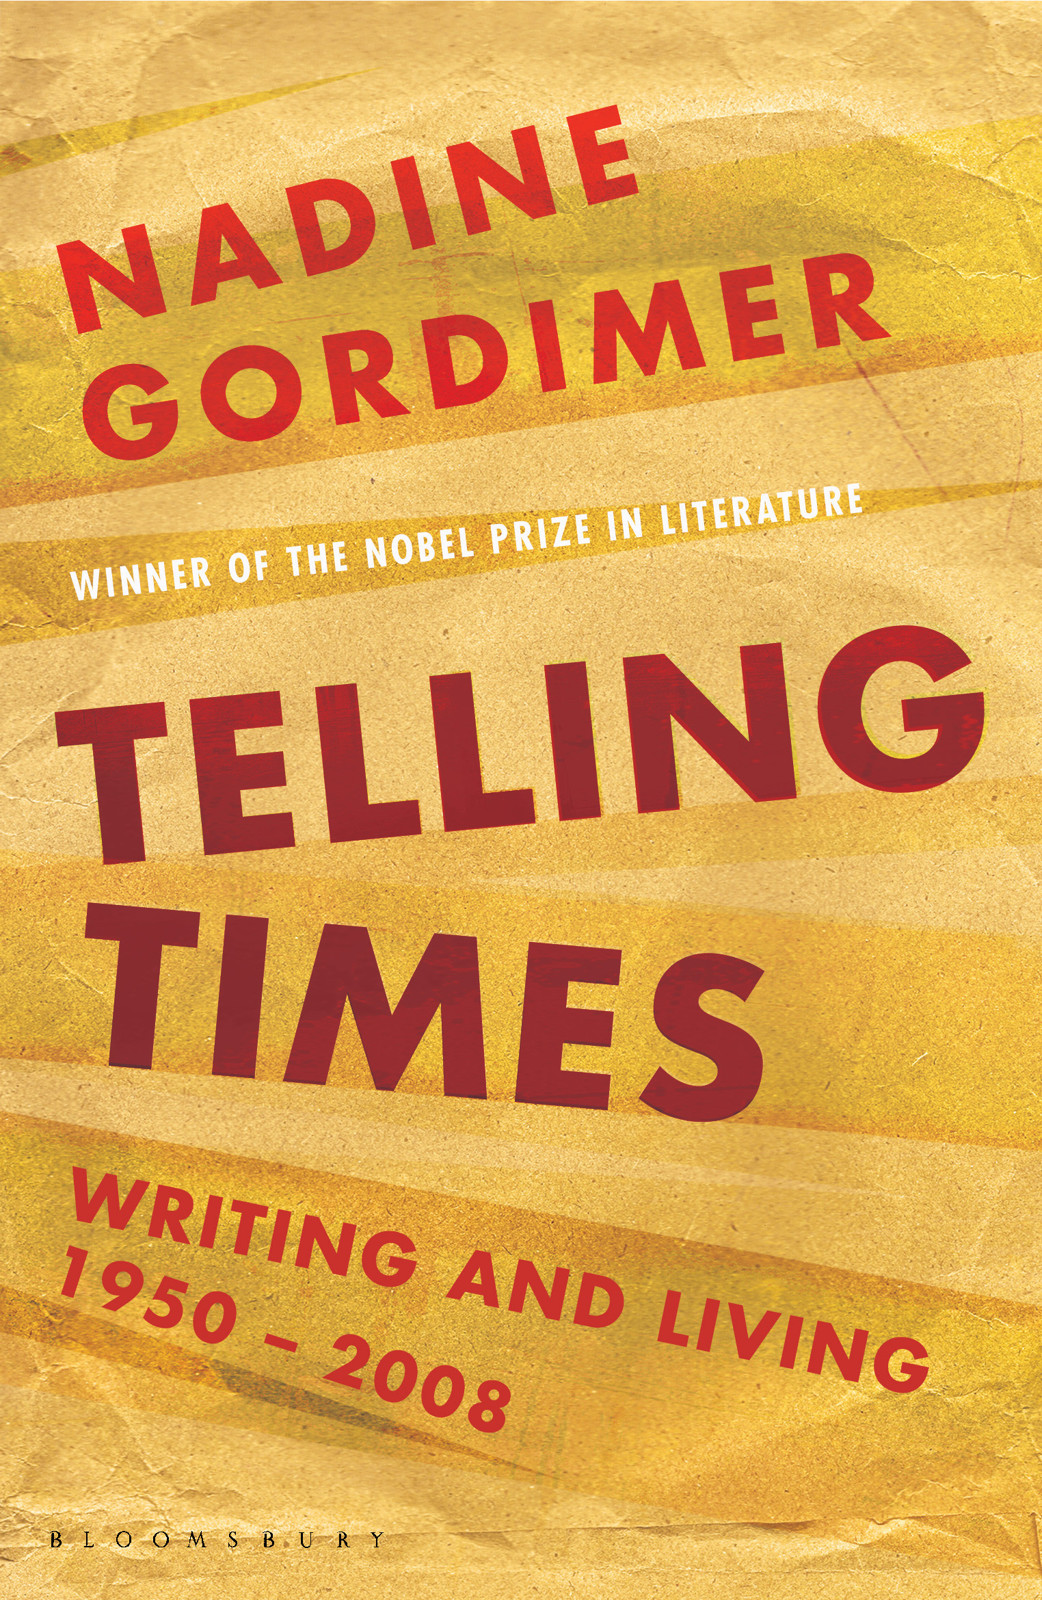 Gordimer Nadine - Telling Times: Writing and Living, 1950-2008 скачать бесплатно